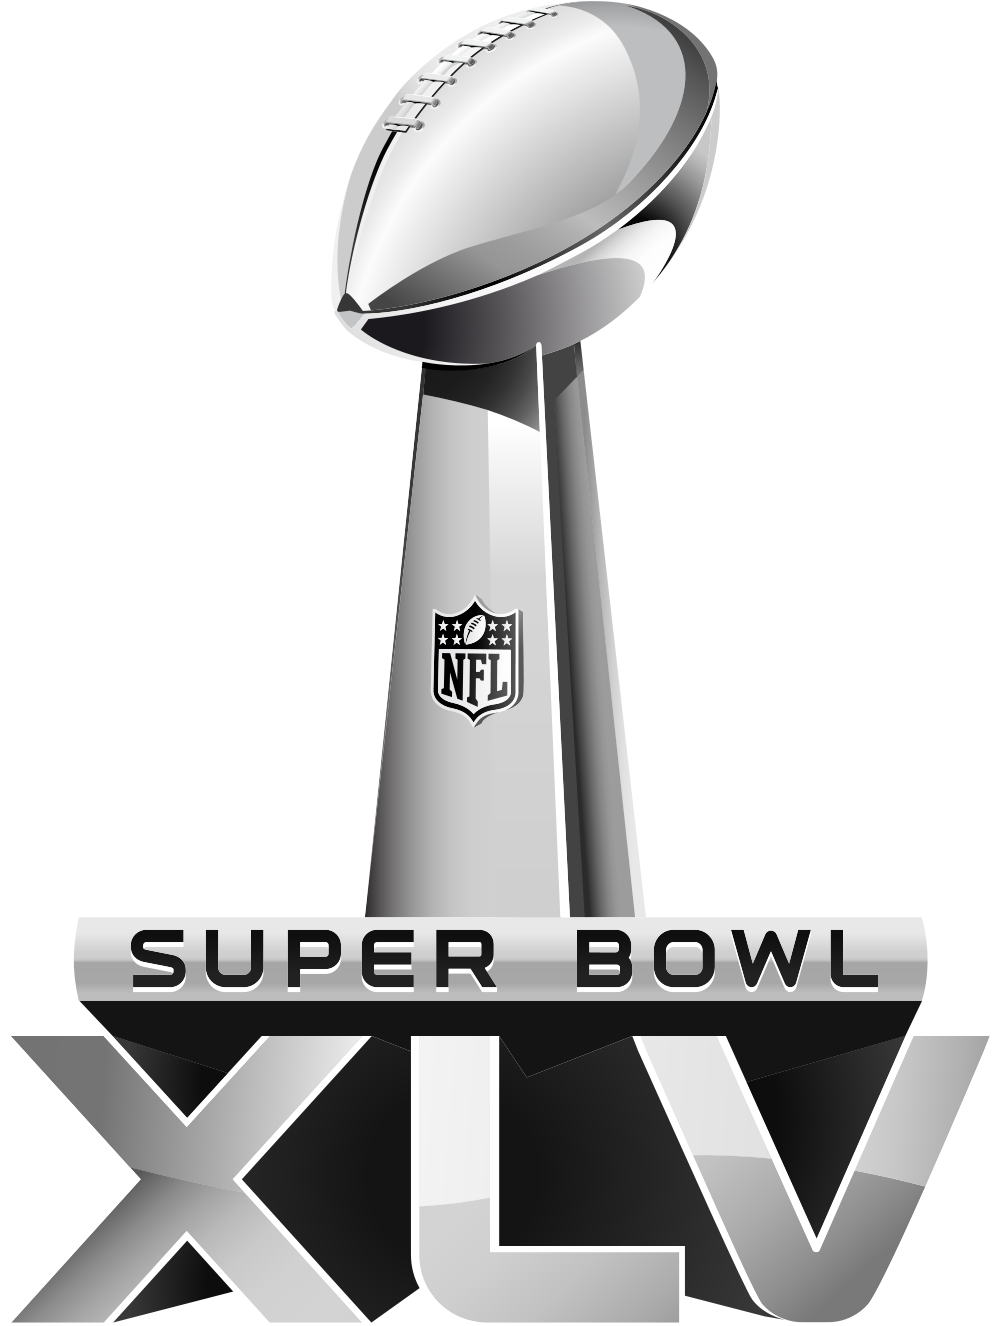 Super Bowl Xlv - Super Bowl, Transparent background PNG HD thumbnail